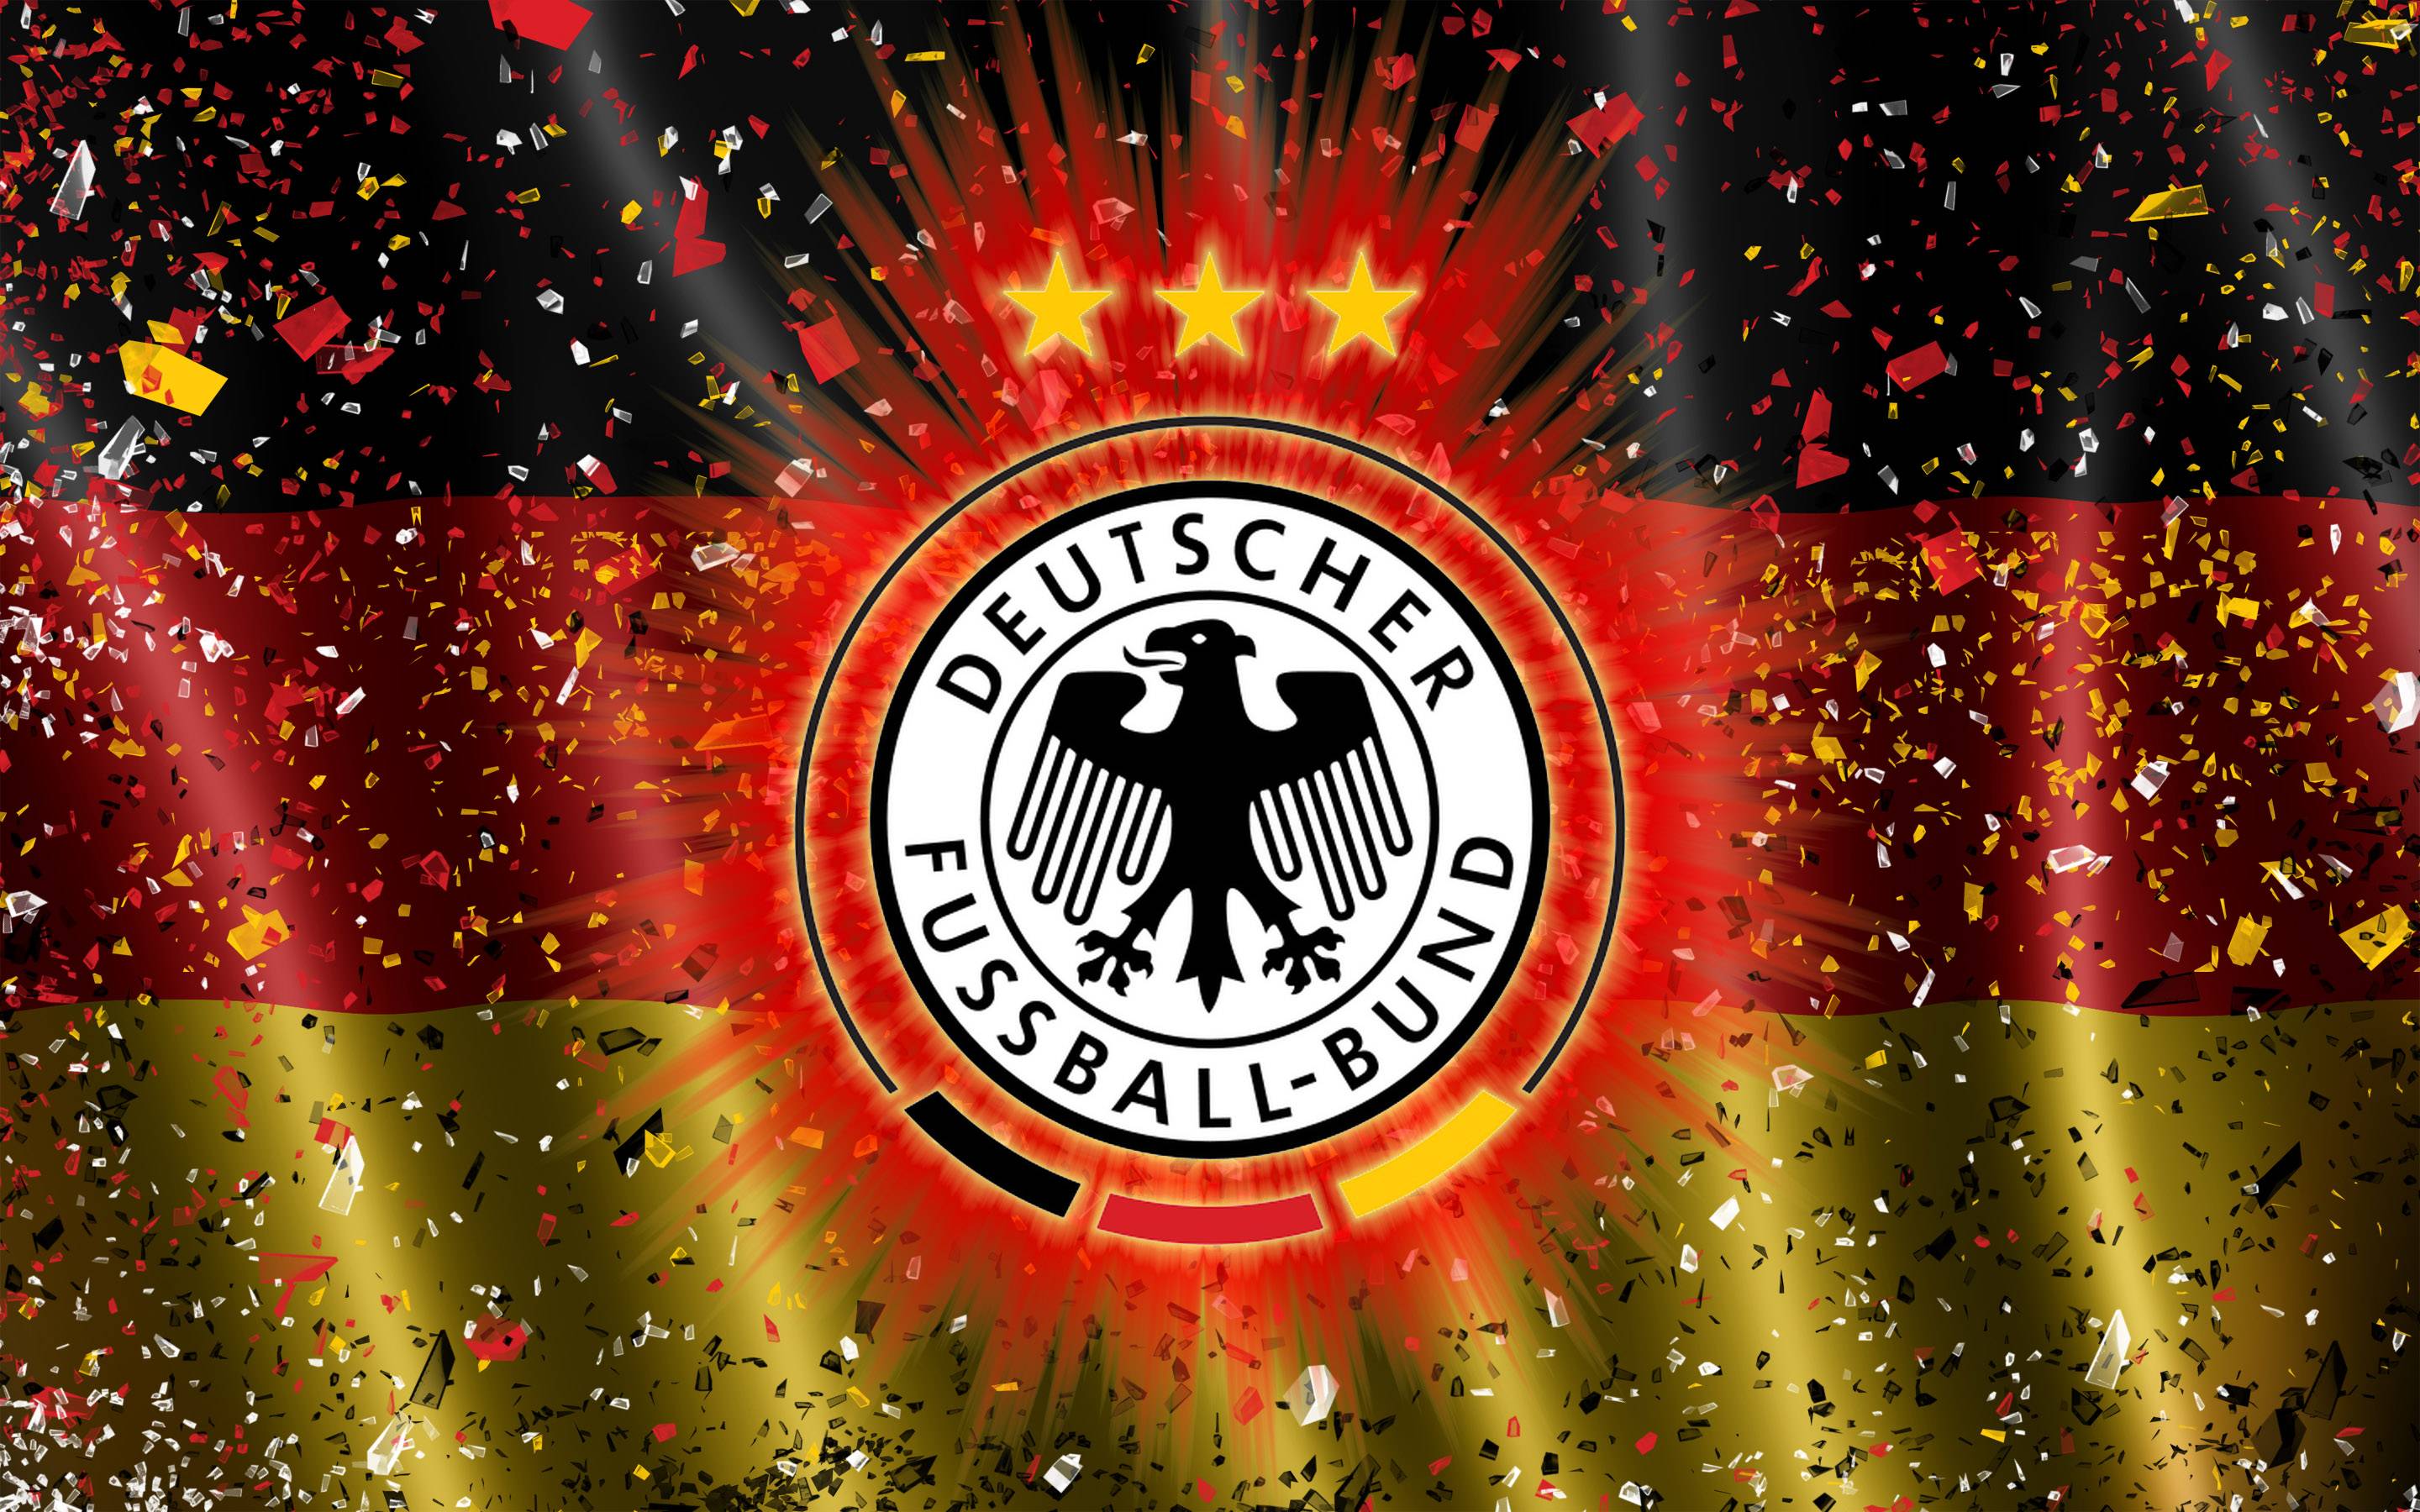 Germany Fotball Team Logo 2014 World Cup Wallpaper Wide or HD